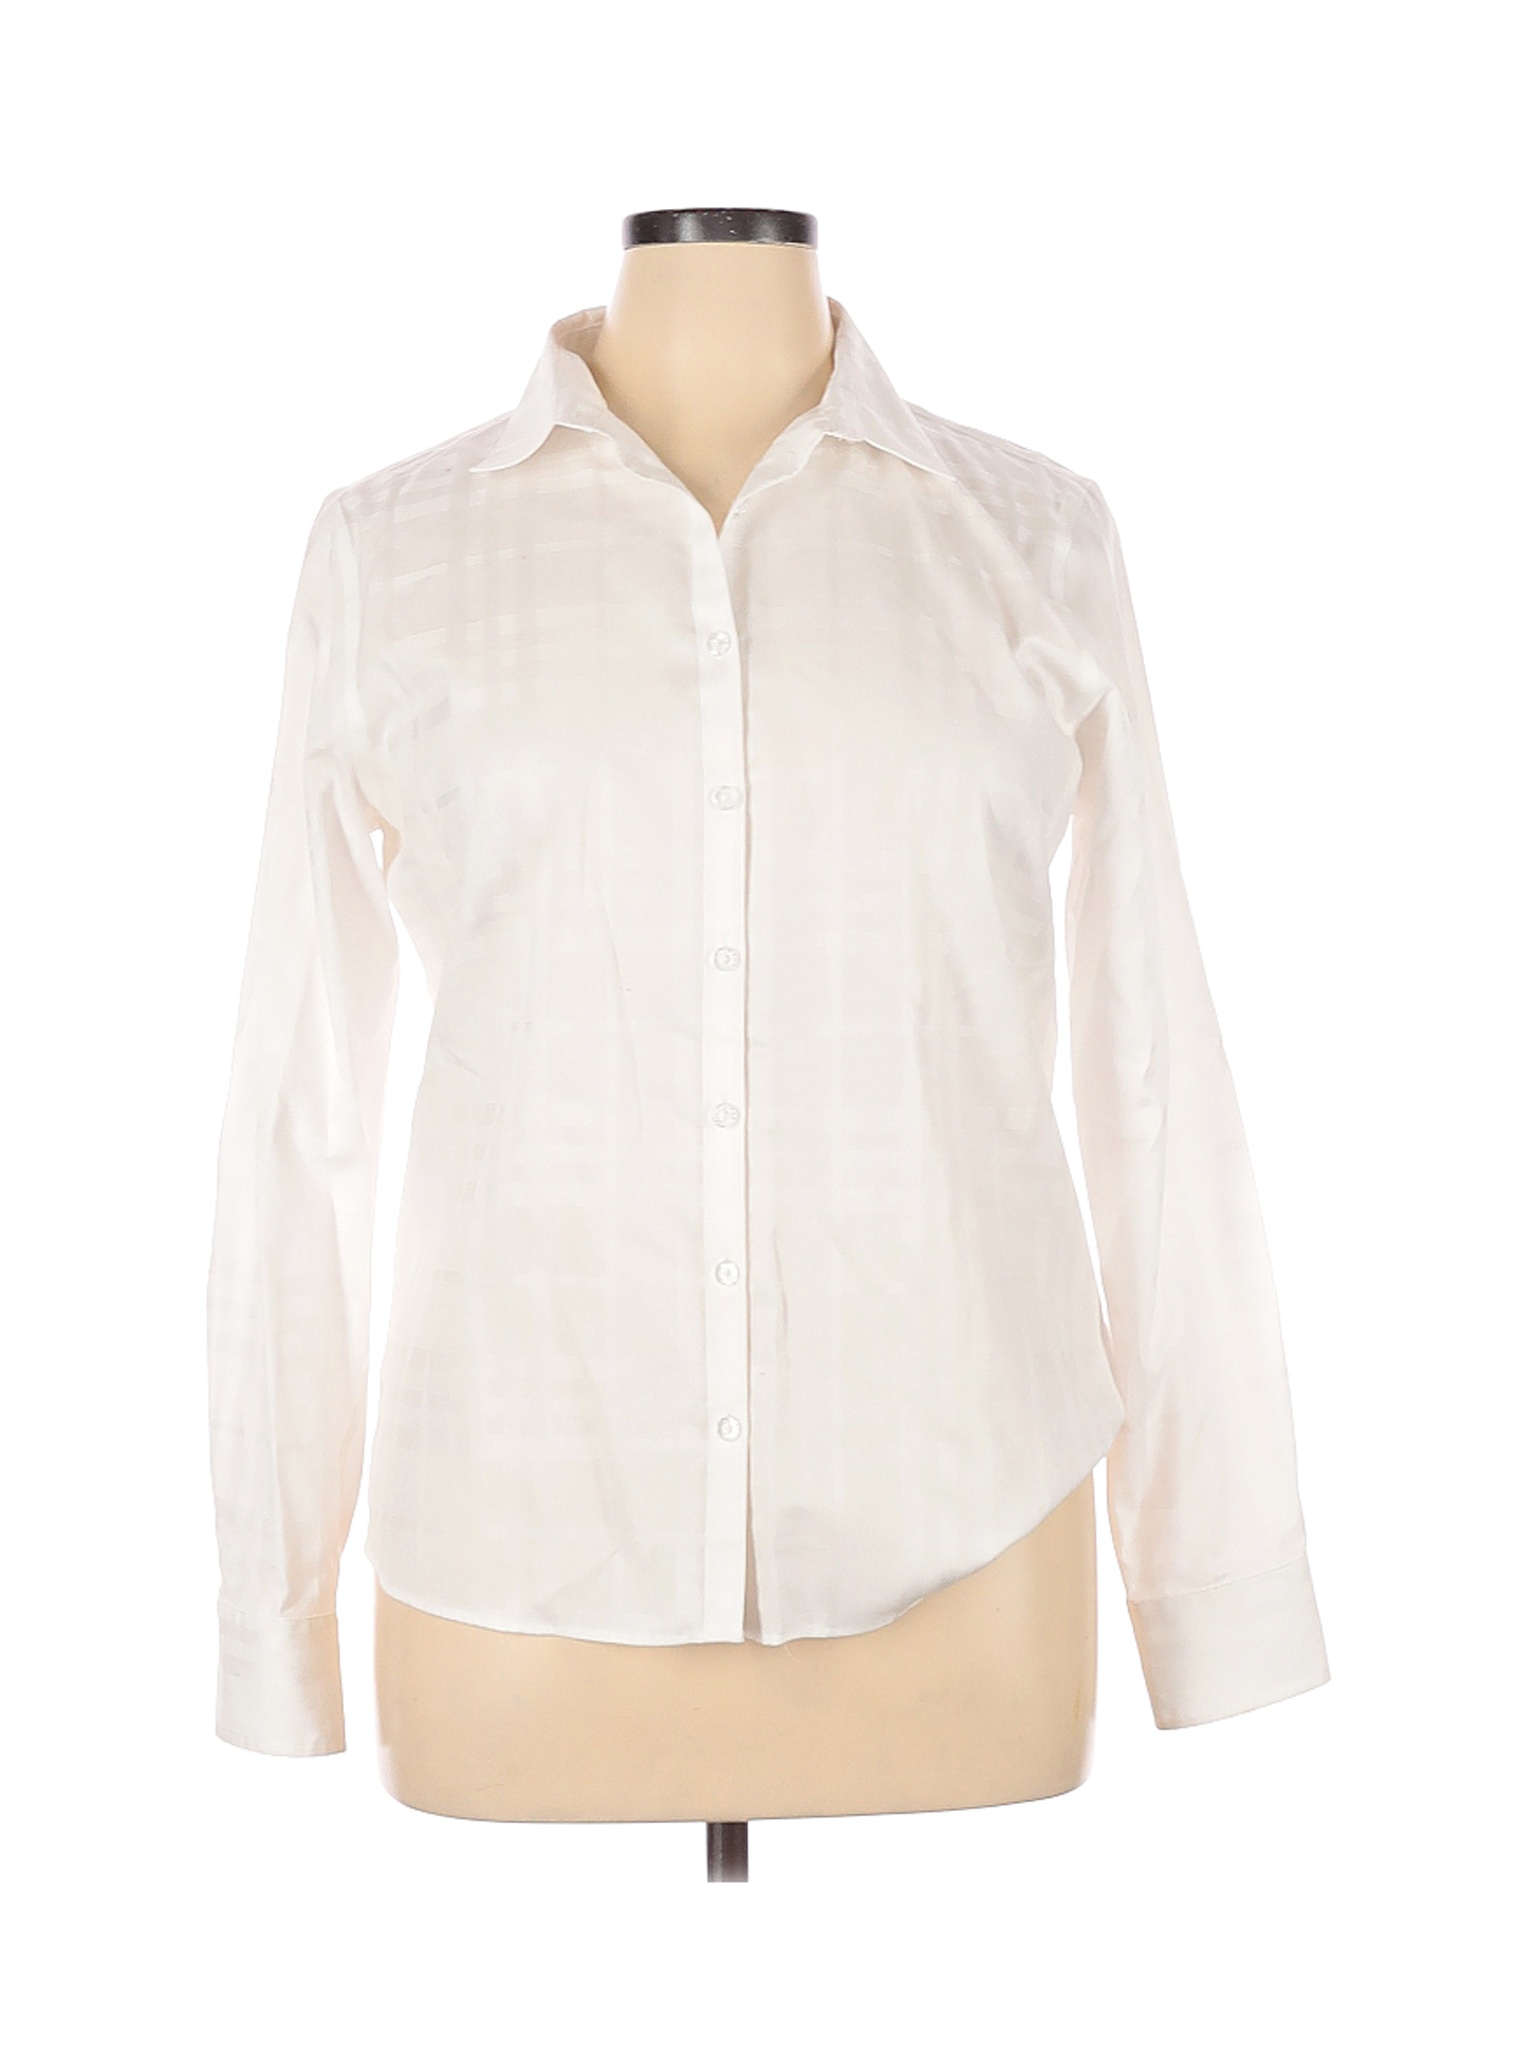 Lands' End Women White Long Sleeve Button-Down Shirt 14 | eBay